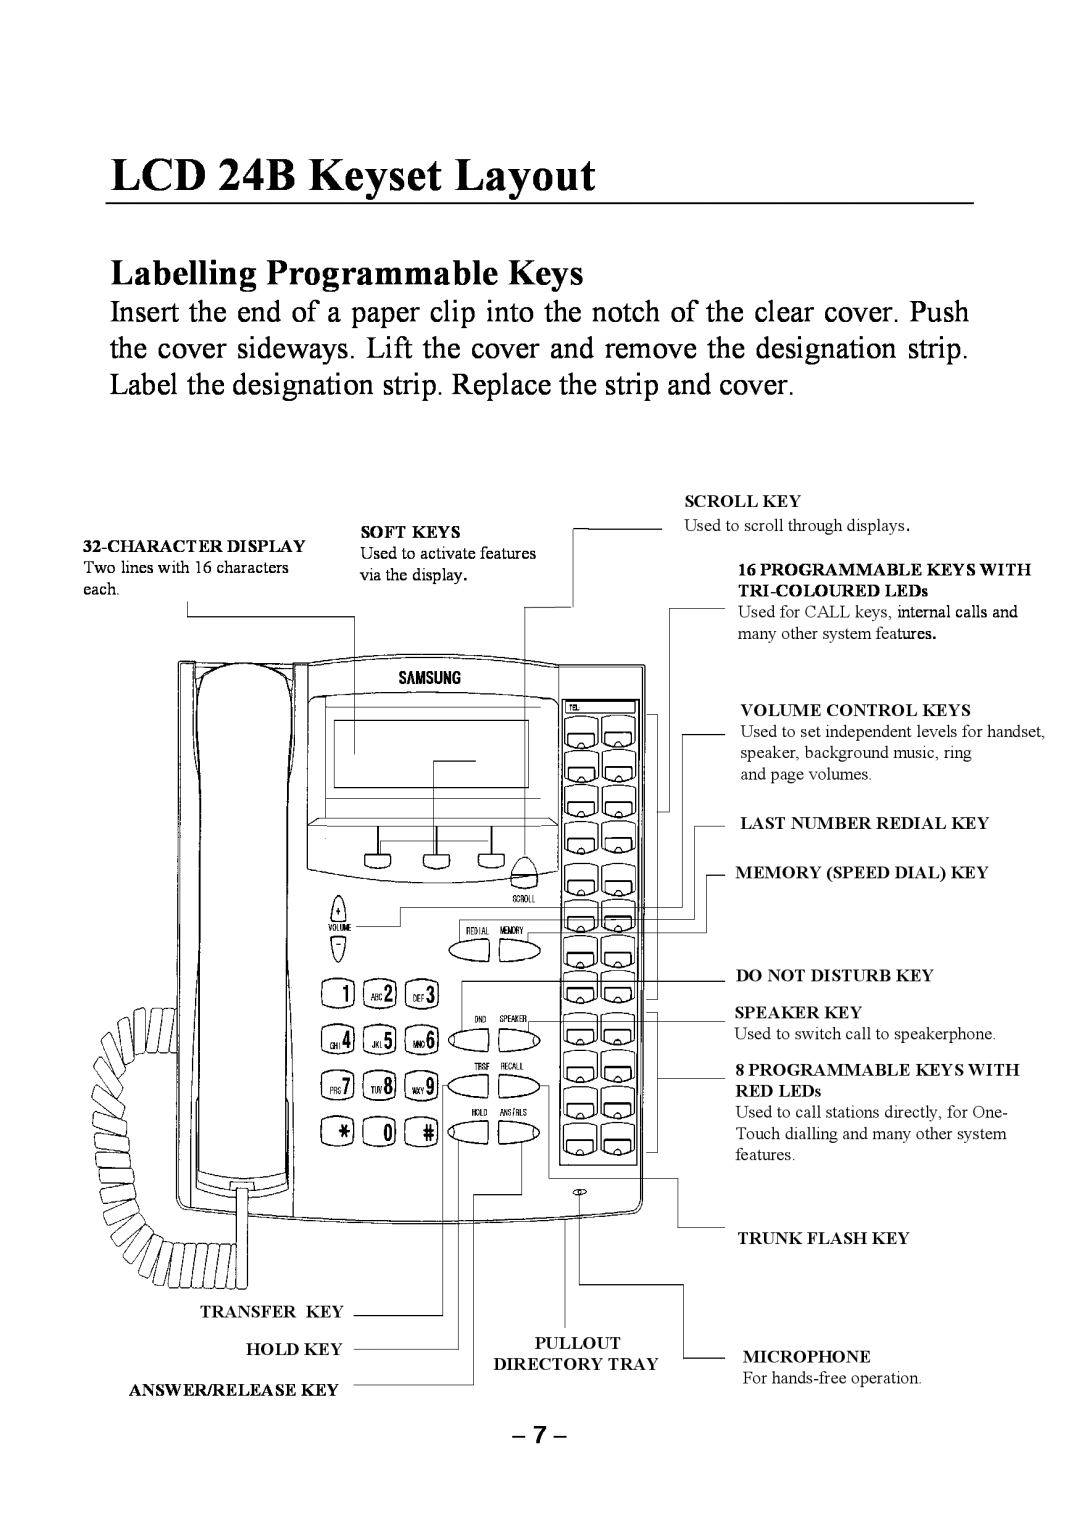 Samsung DCS KEYSET manual LCD 24B Keyset Layout, Labelling Programmable Keys 